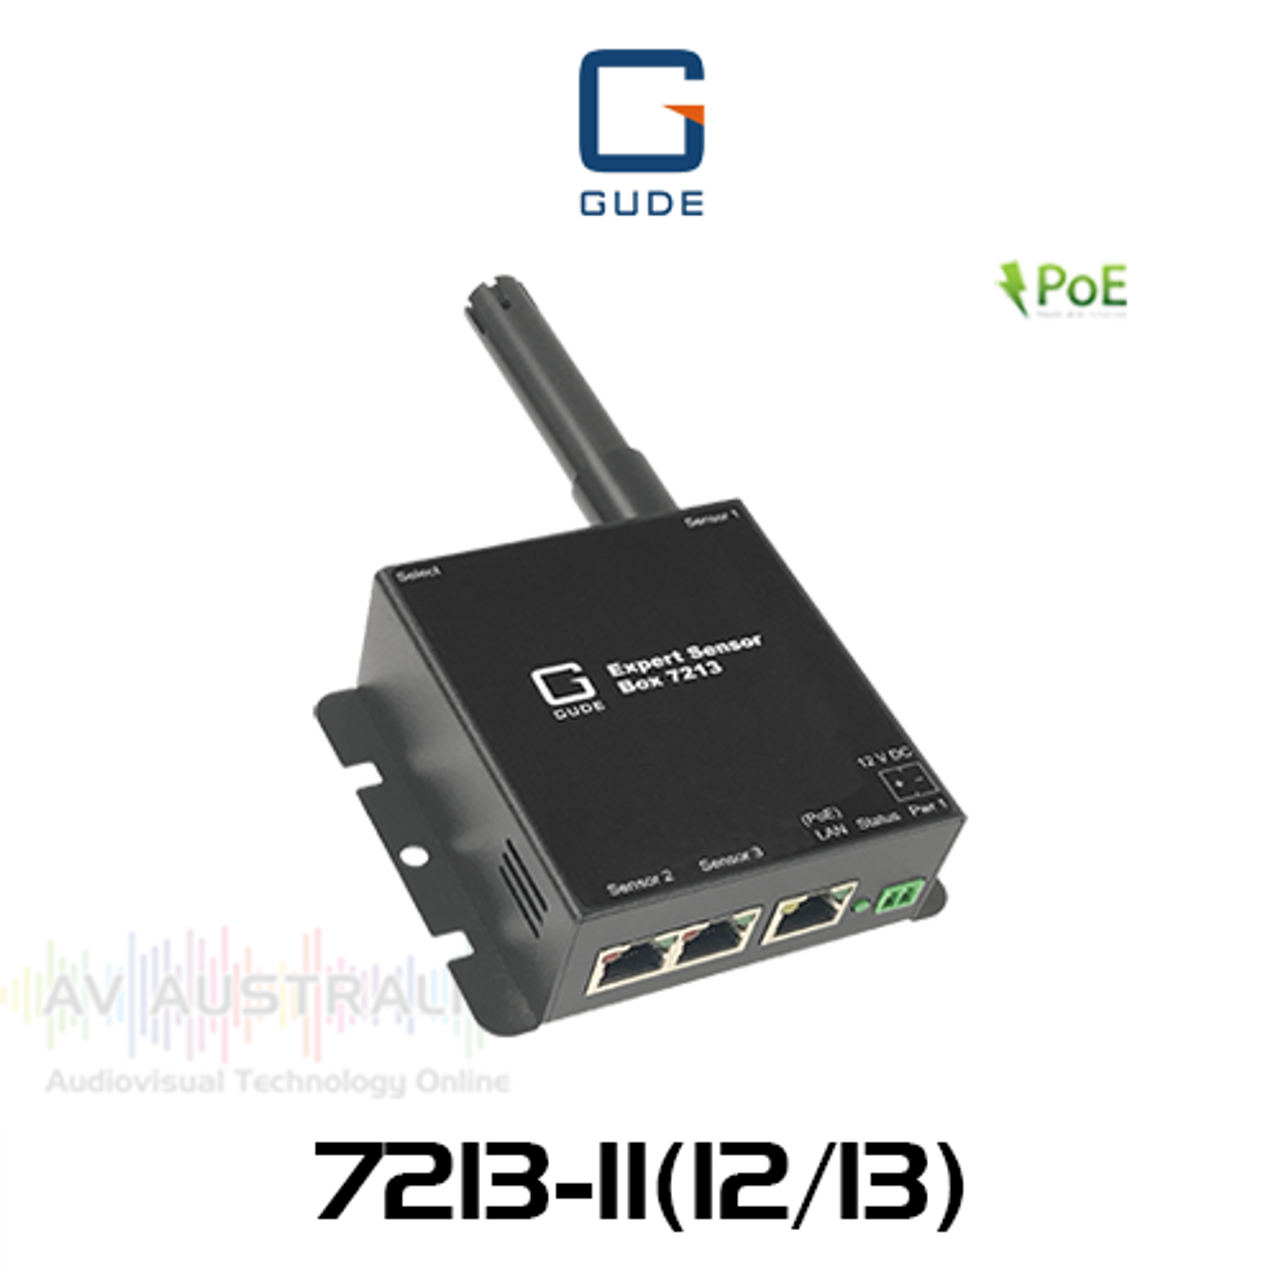 GUDE PoE LAN Sensor For Environment Monitoring (Temperature, Humidity, Air Pressure)